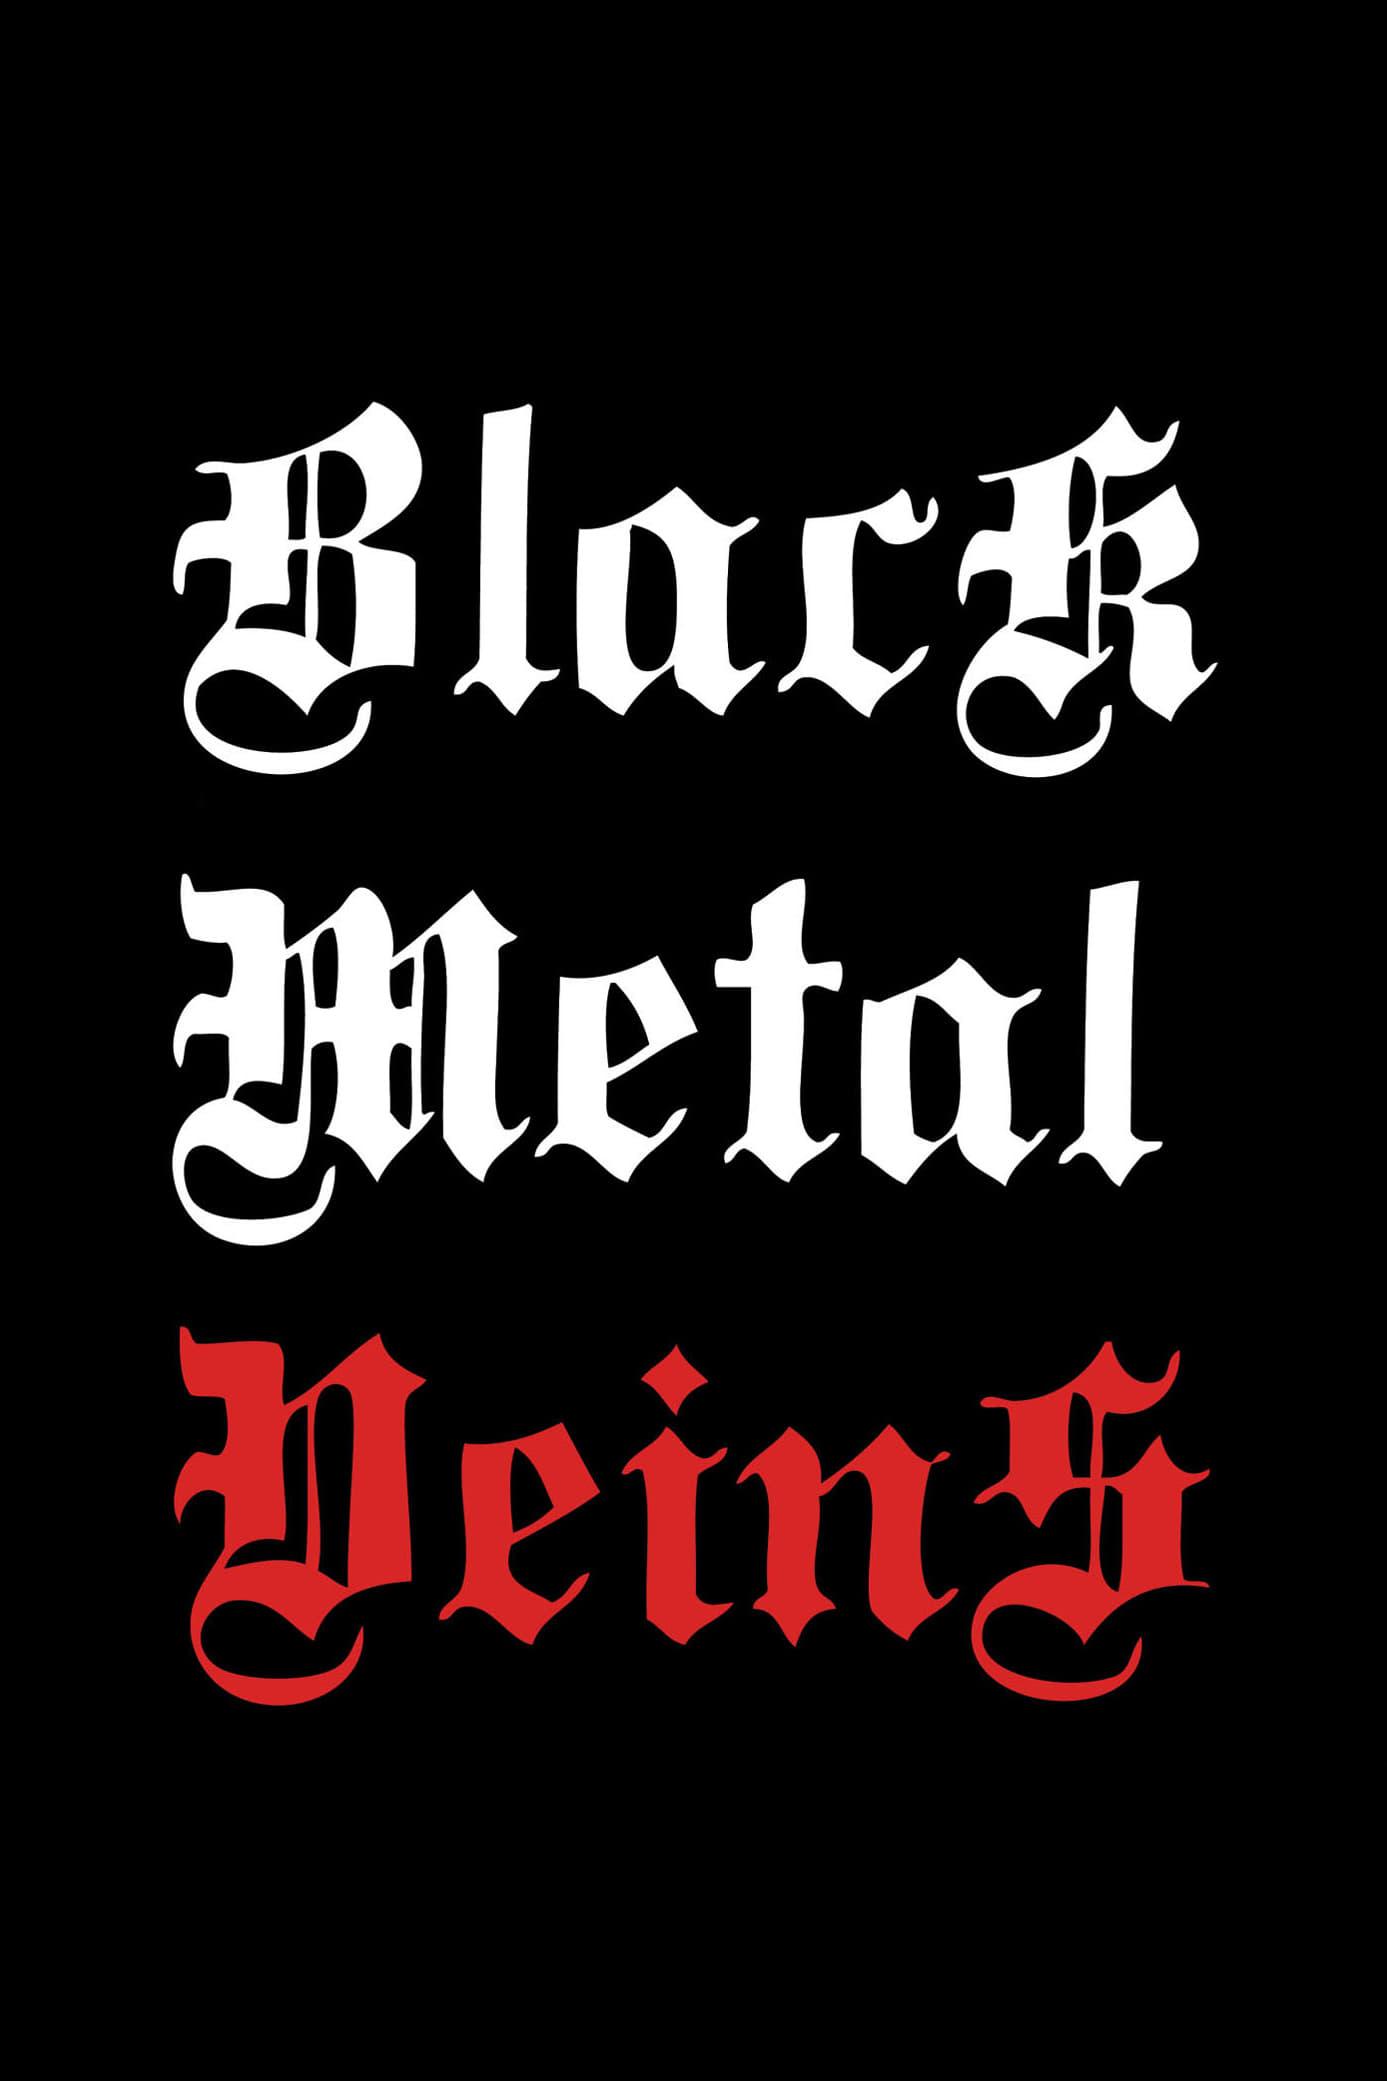 Black Metal Veins poster